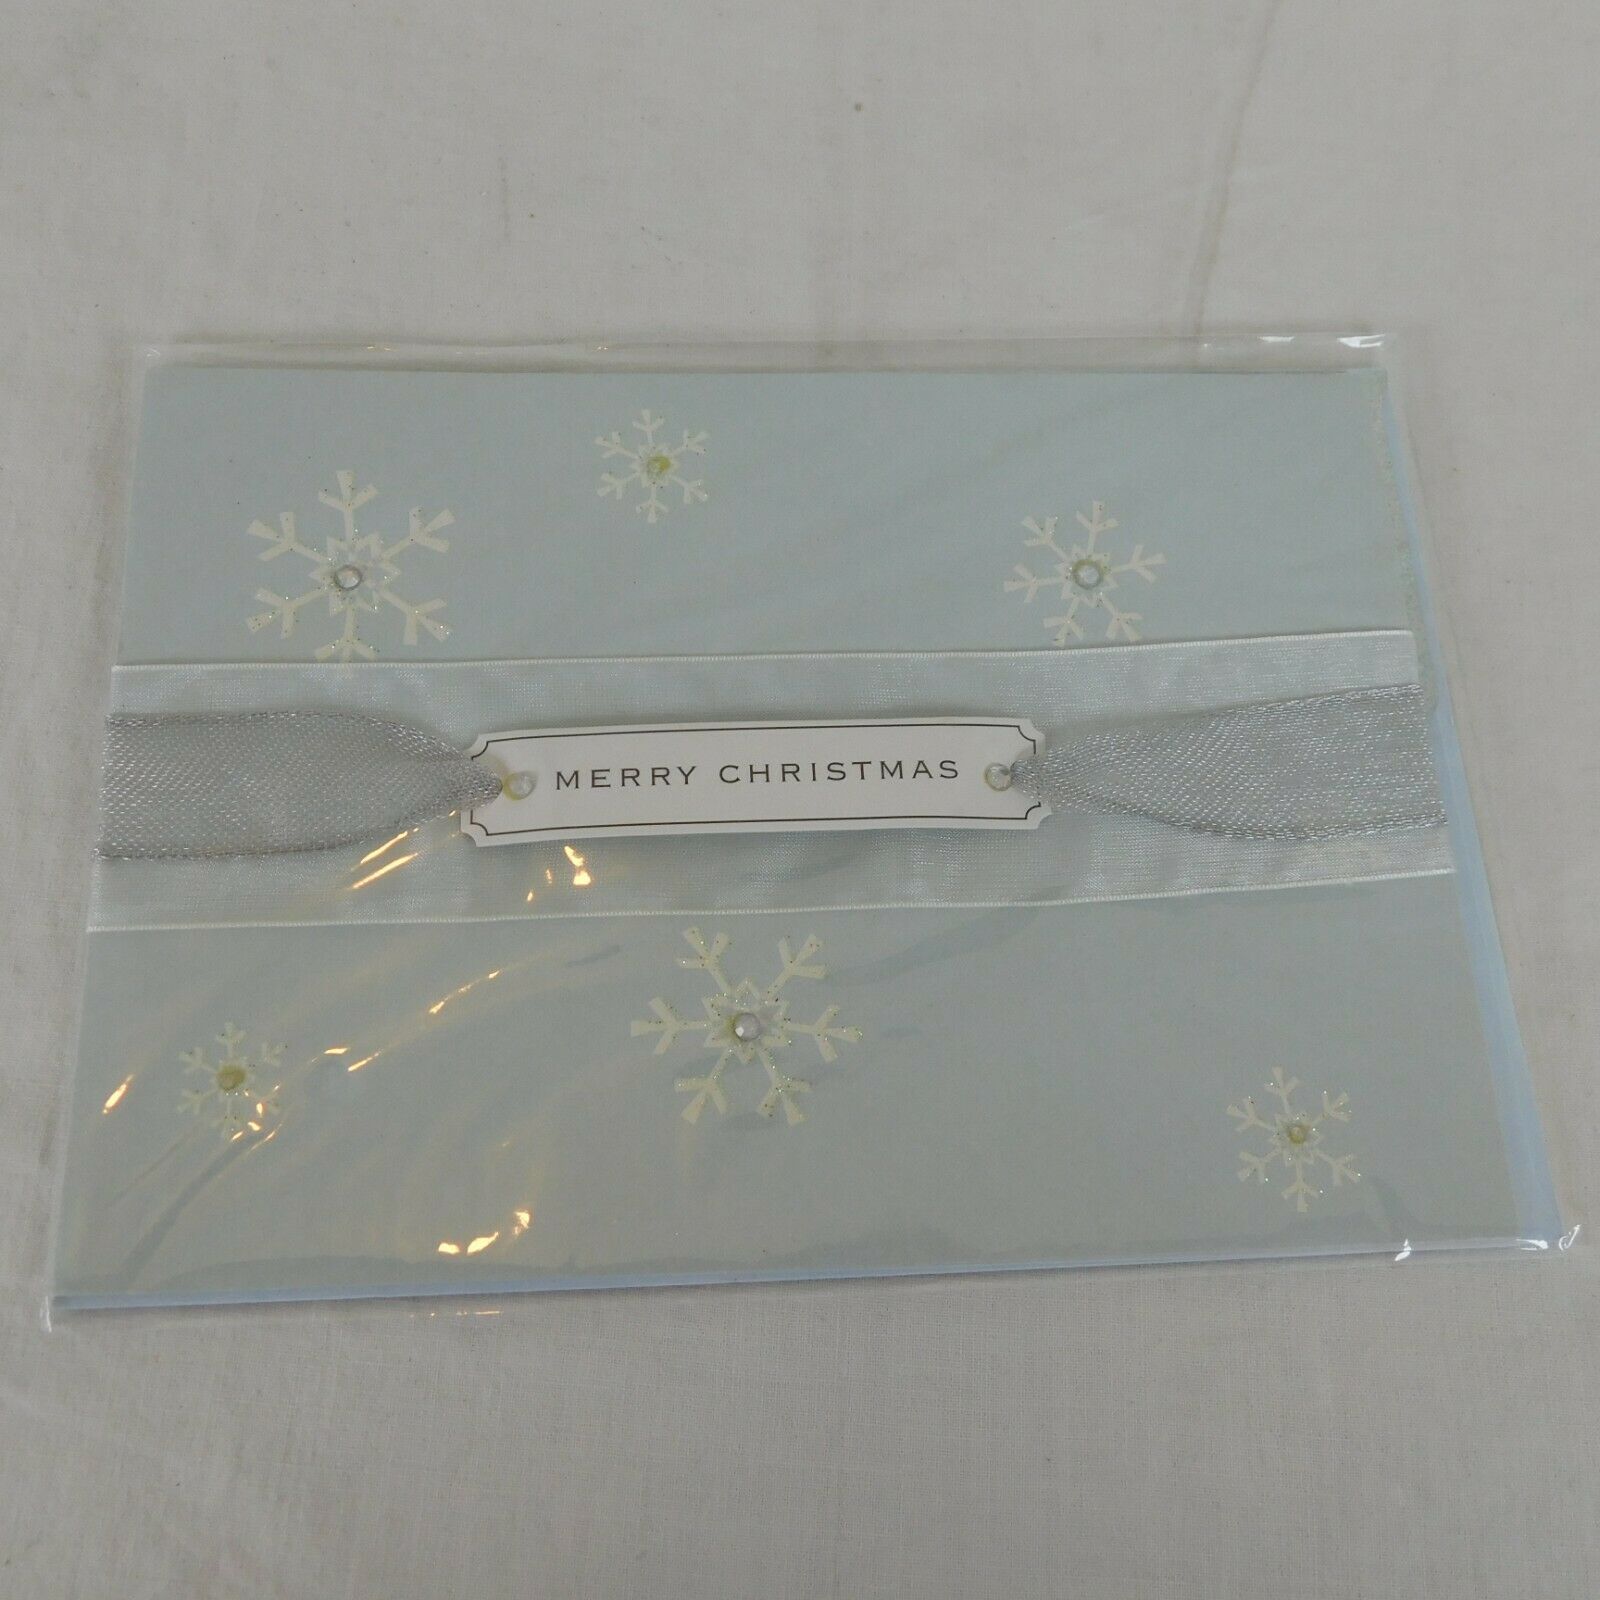 Paper Magic Group Merry Christmas Greeting Card Snowflakes Ribbon Tag Envelope - $4.00